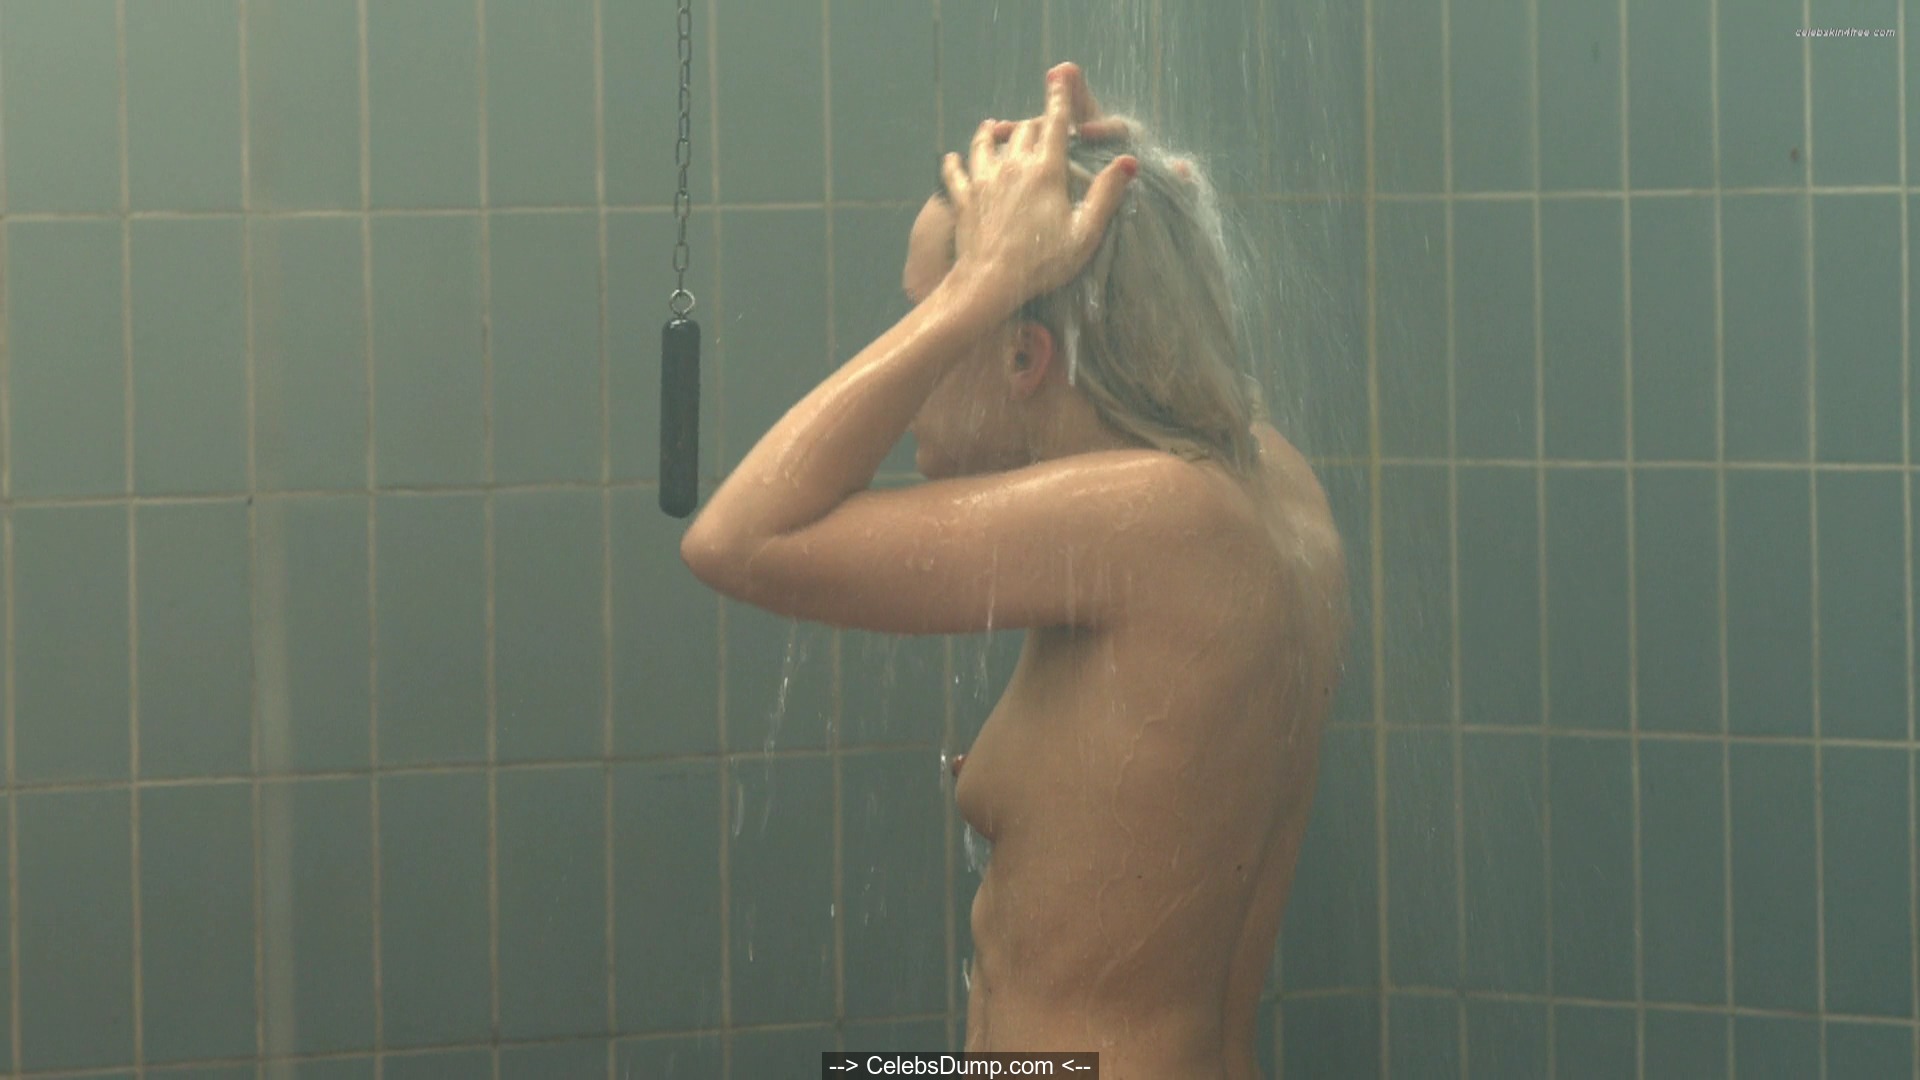 Veerle Baetens nude under shower vidcaps.